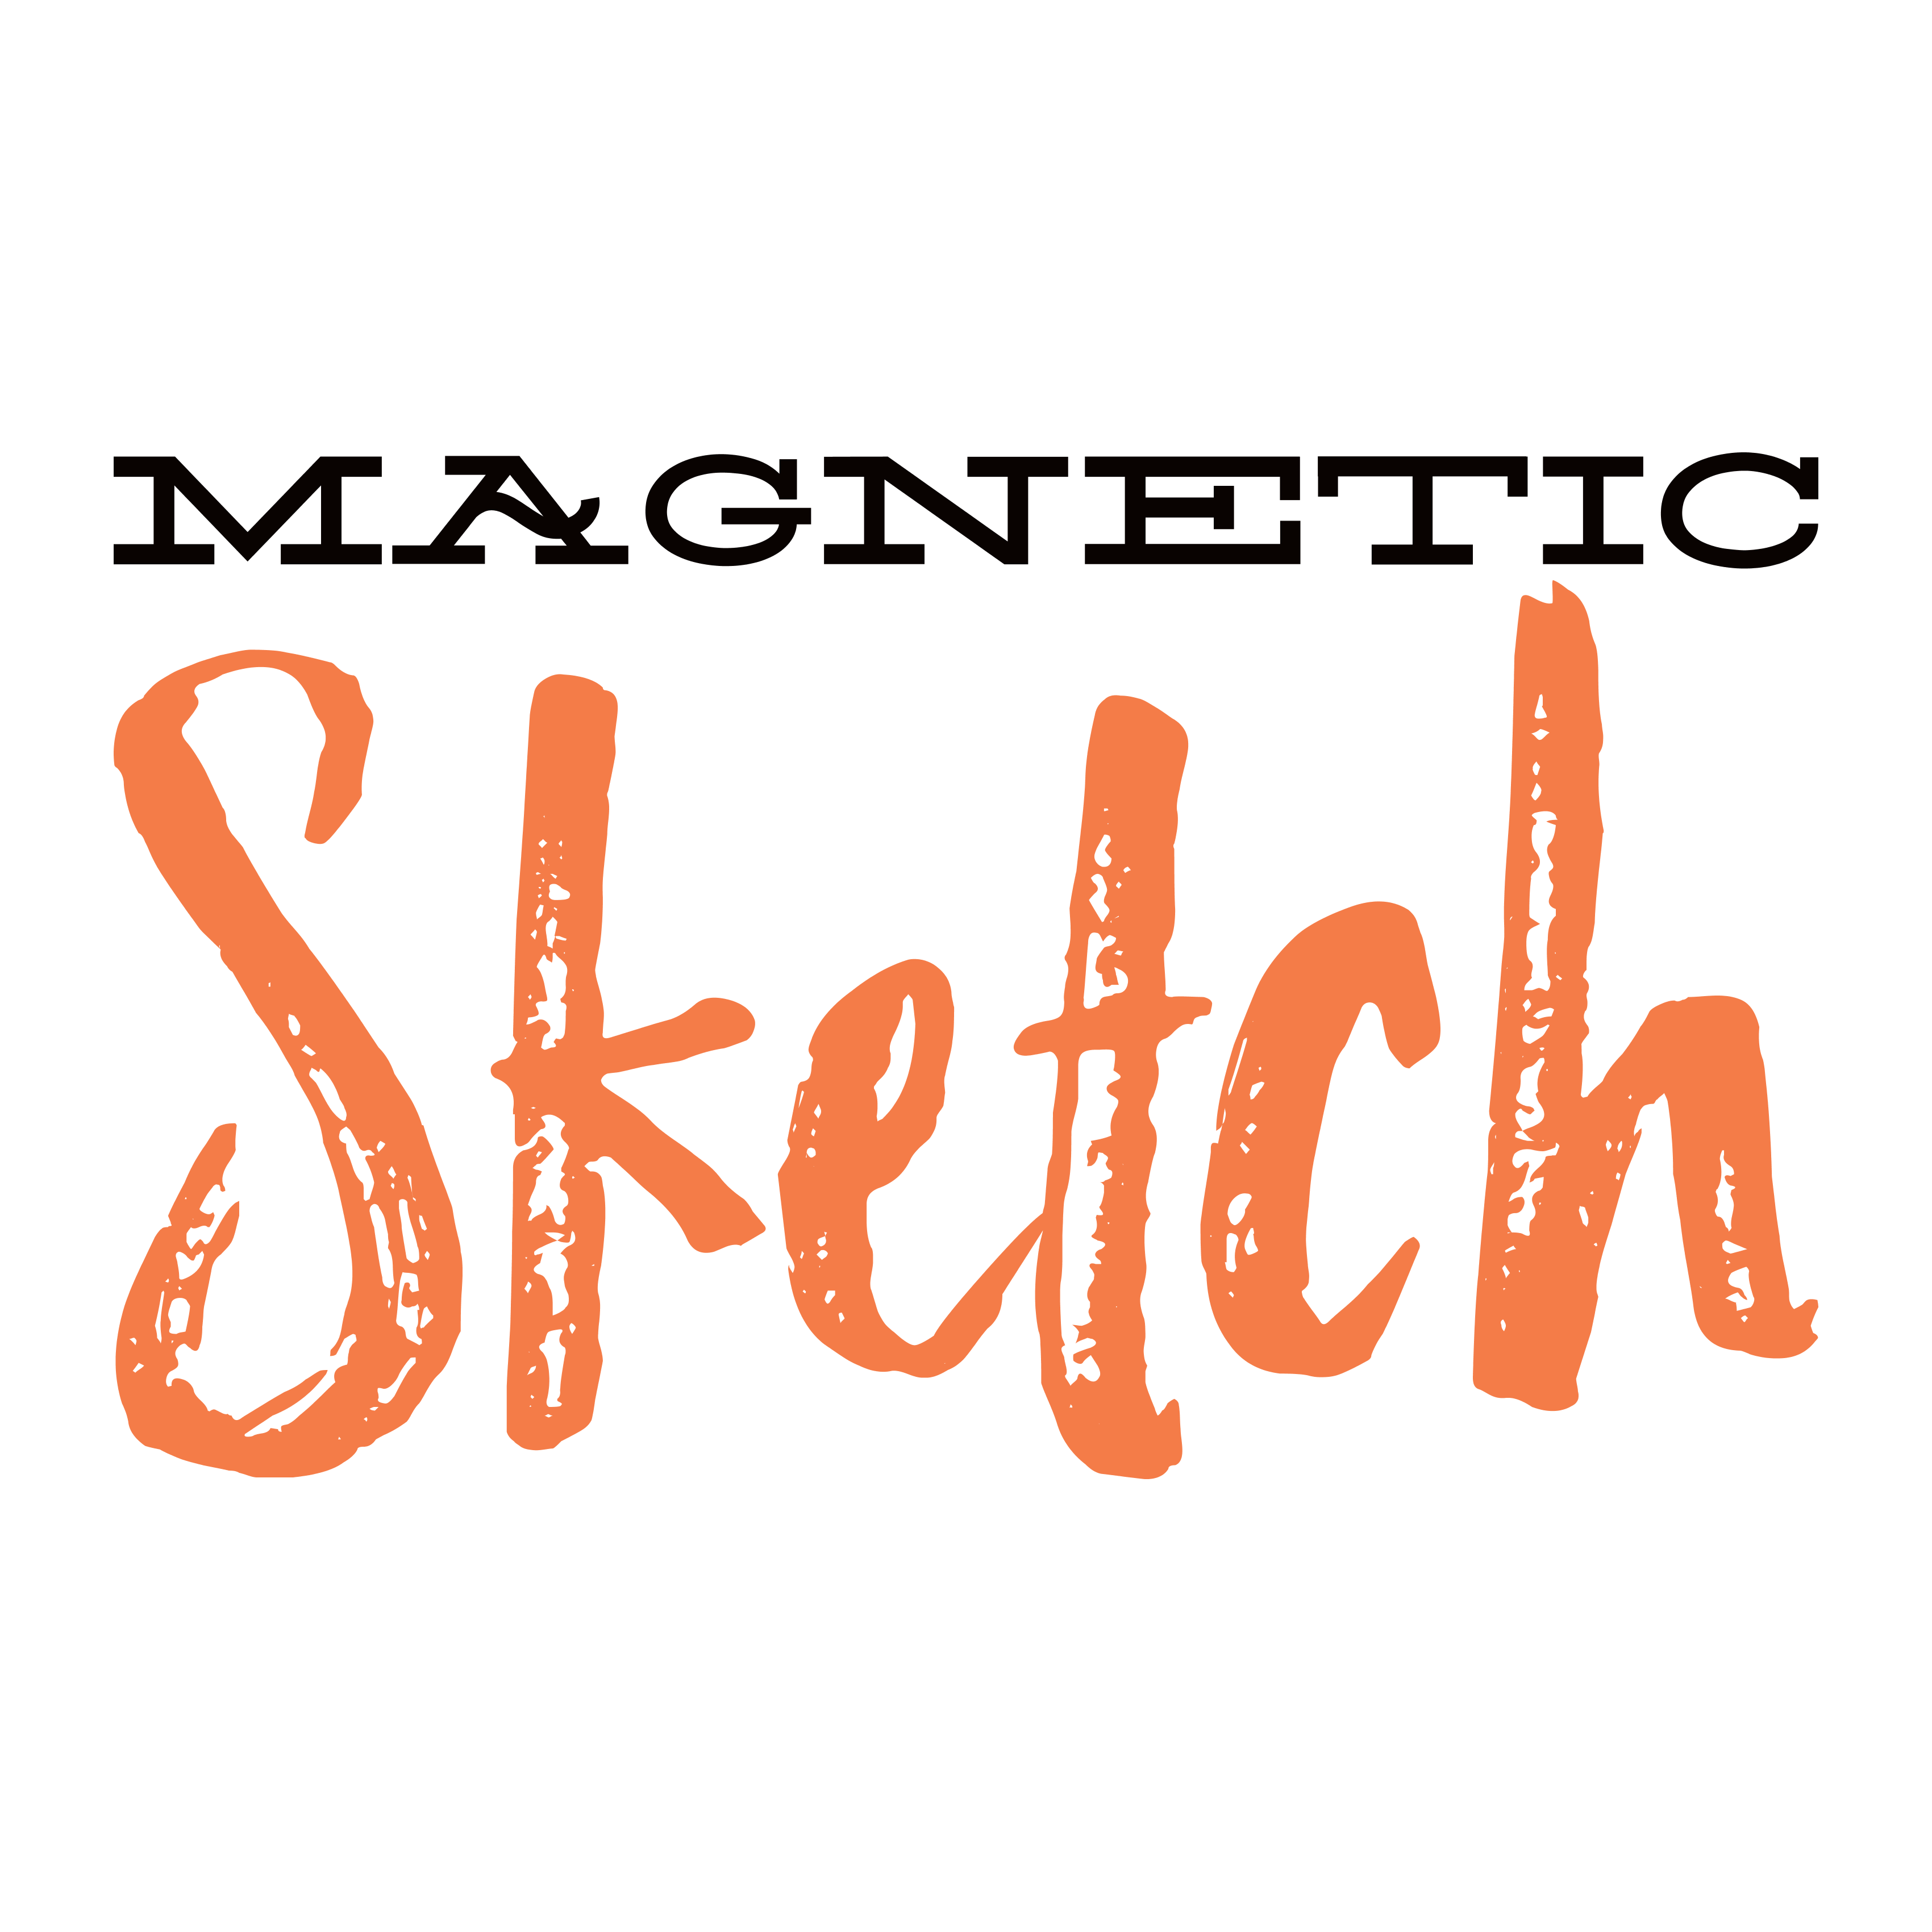 Magnetic Sketch